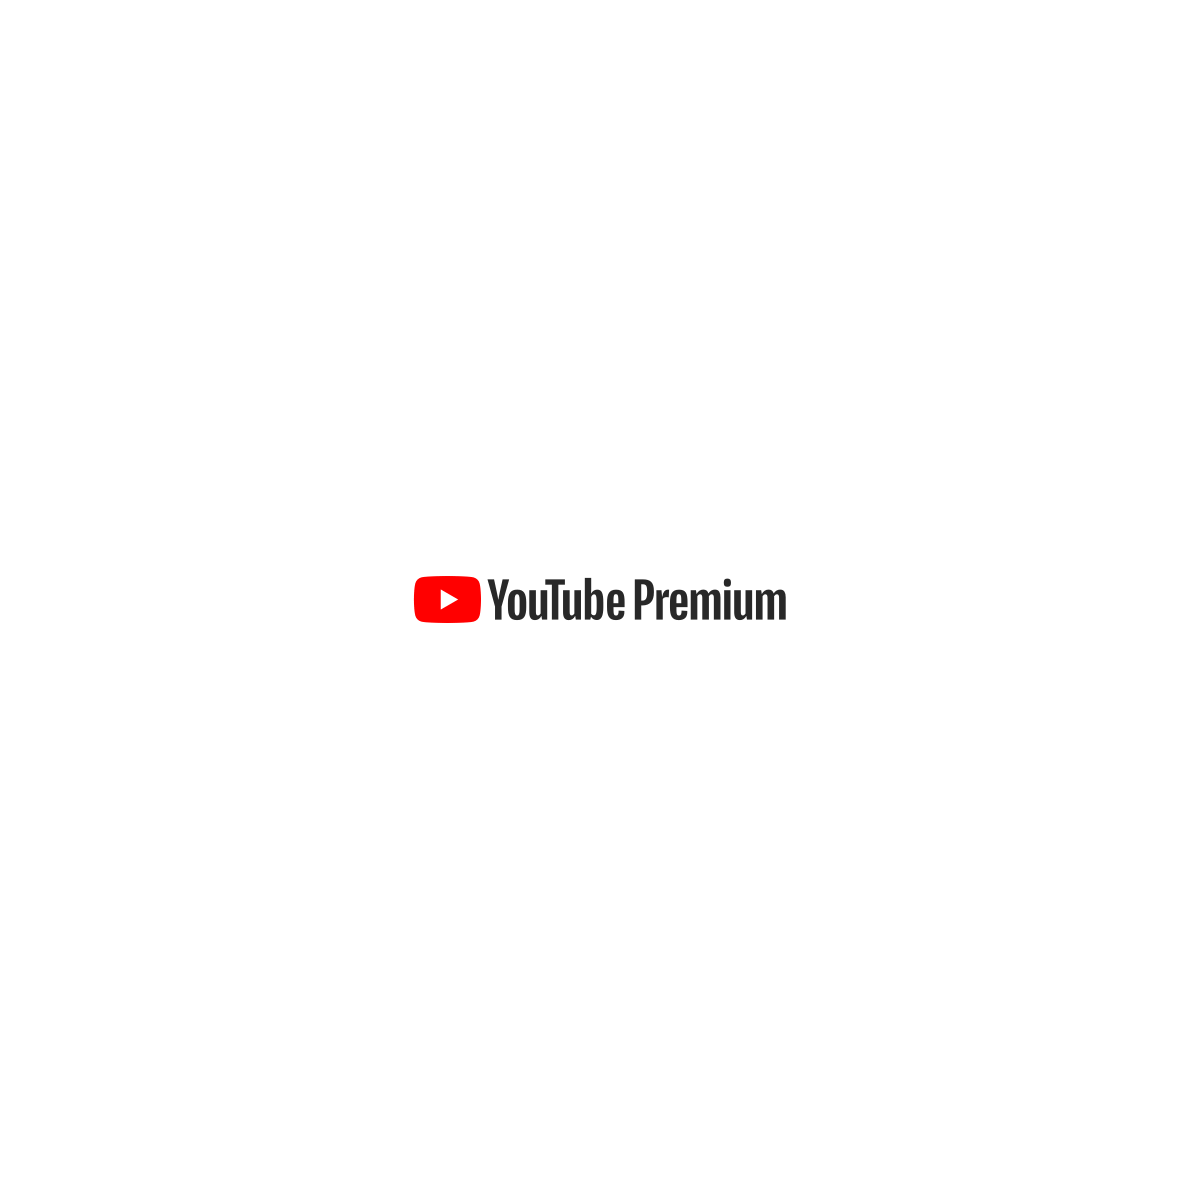 YouTube App Logo - YouTube Premium - YouTube